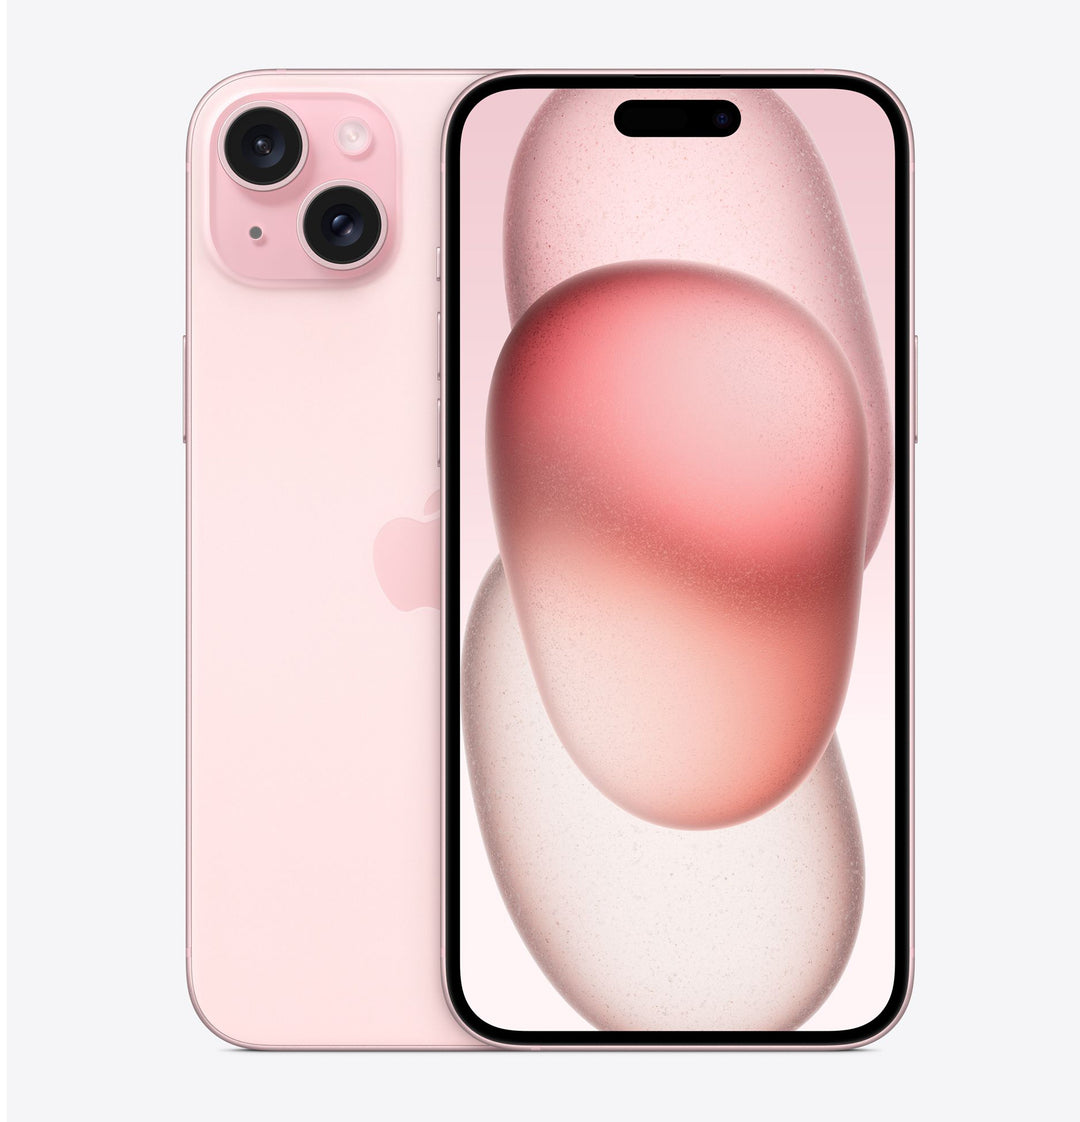 Square Hard Box Pink Case Iphone 11 Pro Max